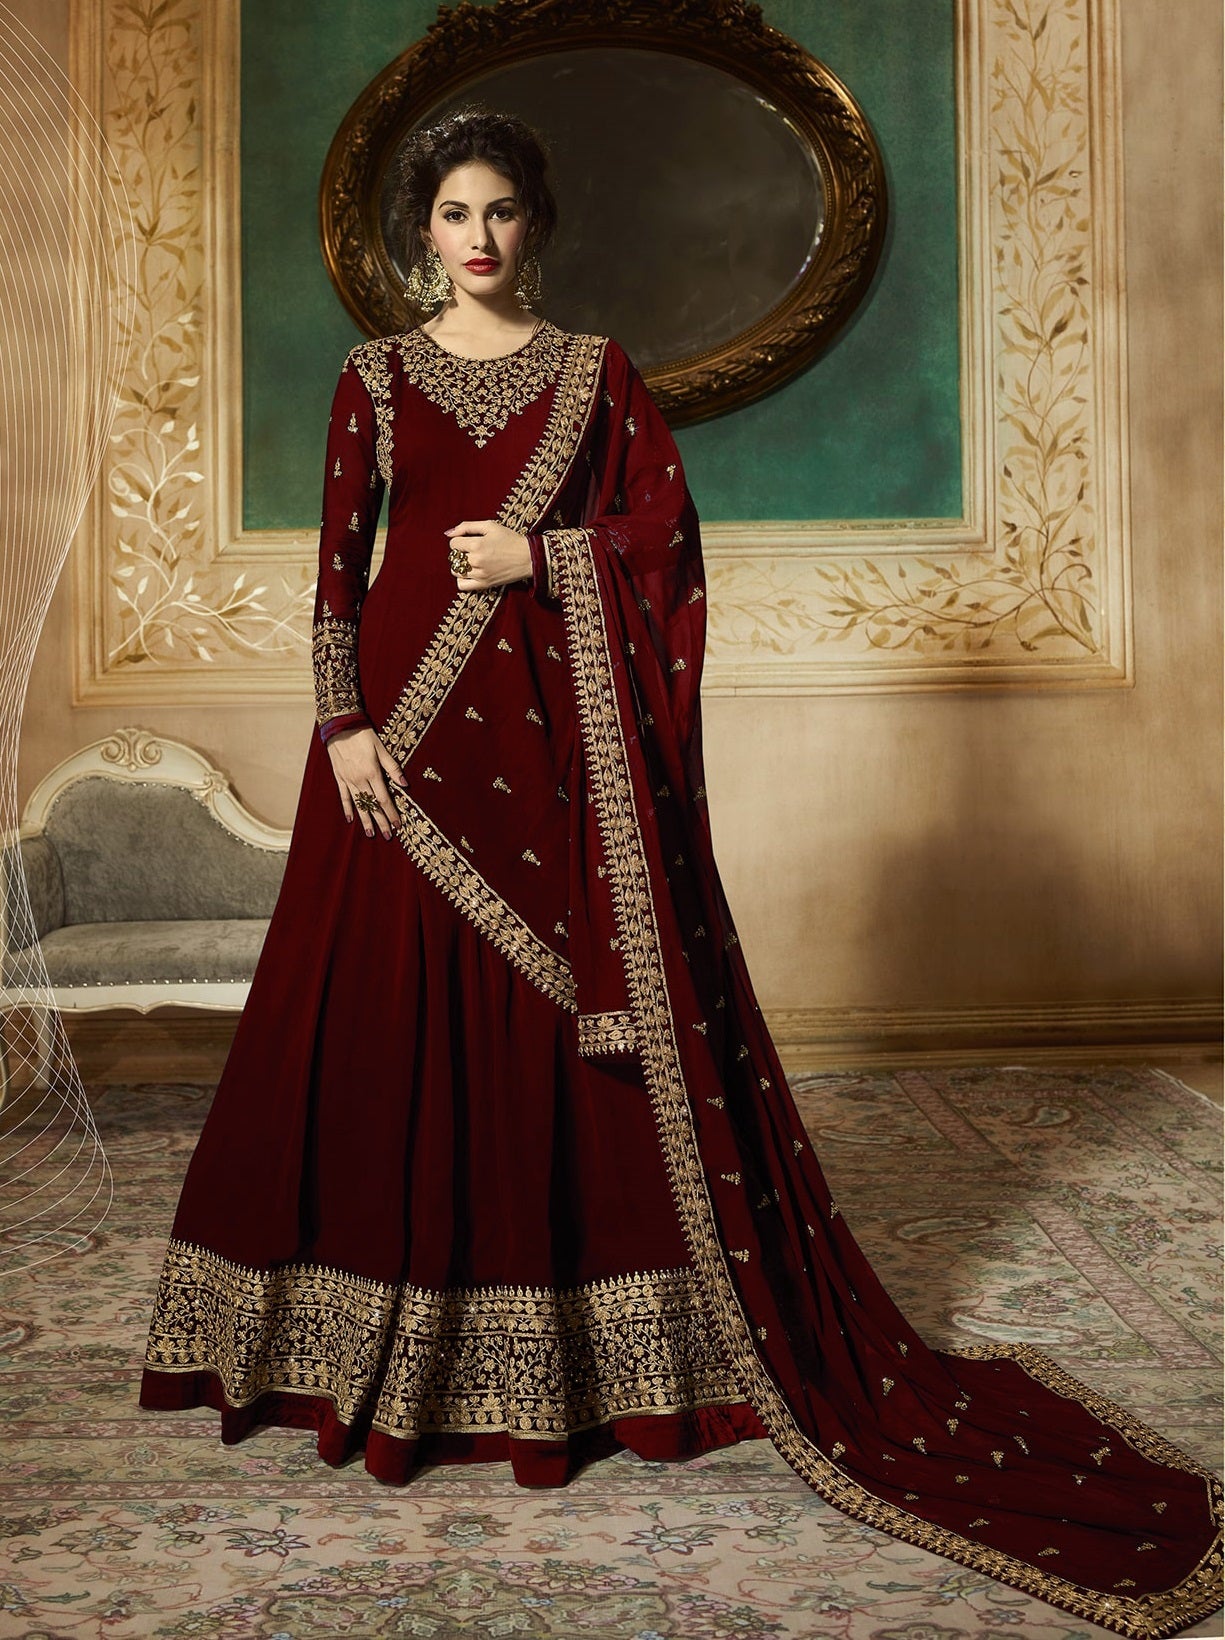 Black Indian Stylish Designer Bollywood Party Wear Anarkali Salwar Suit Dress Material Unstitched For Women